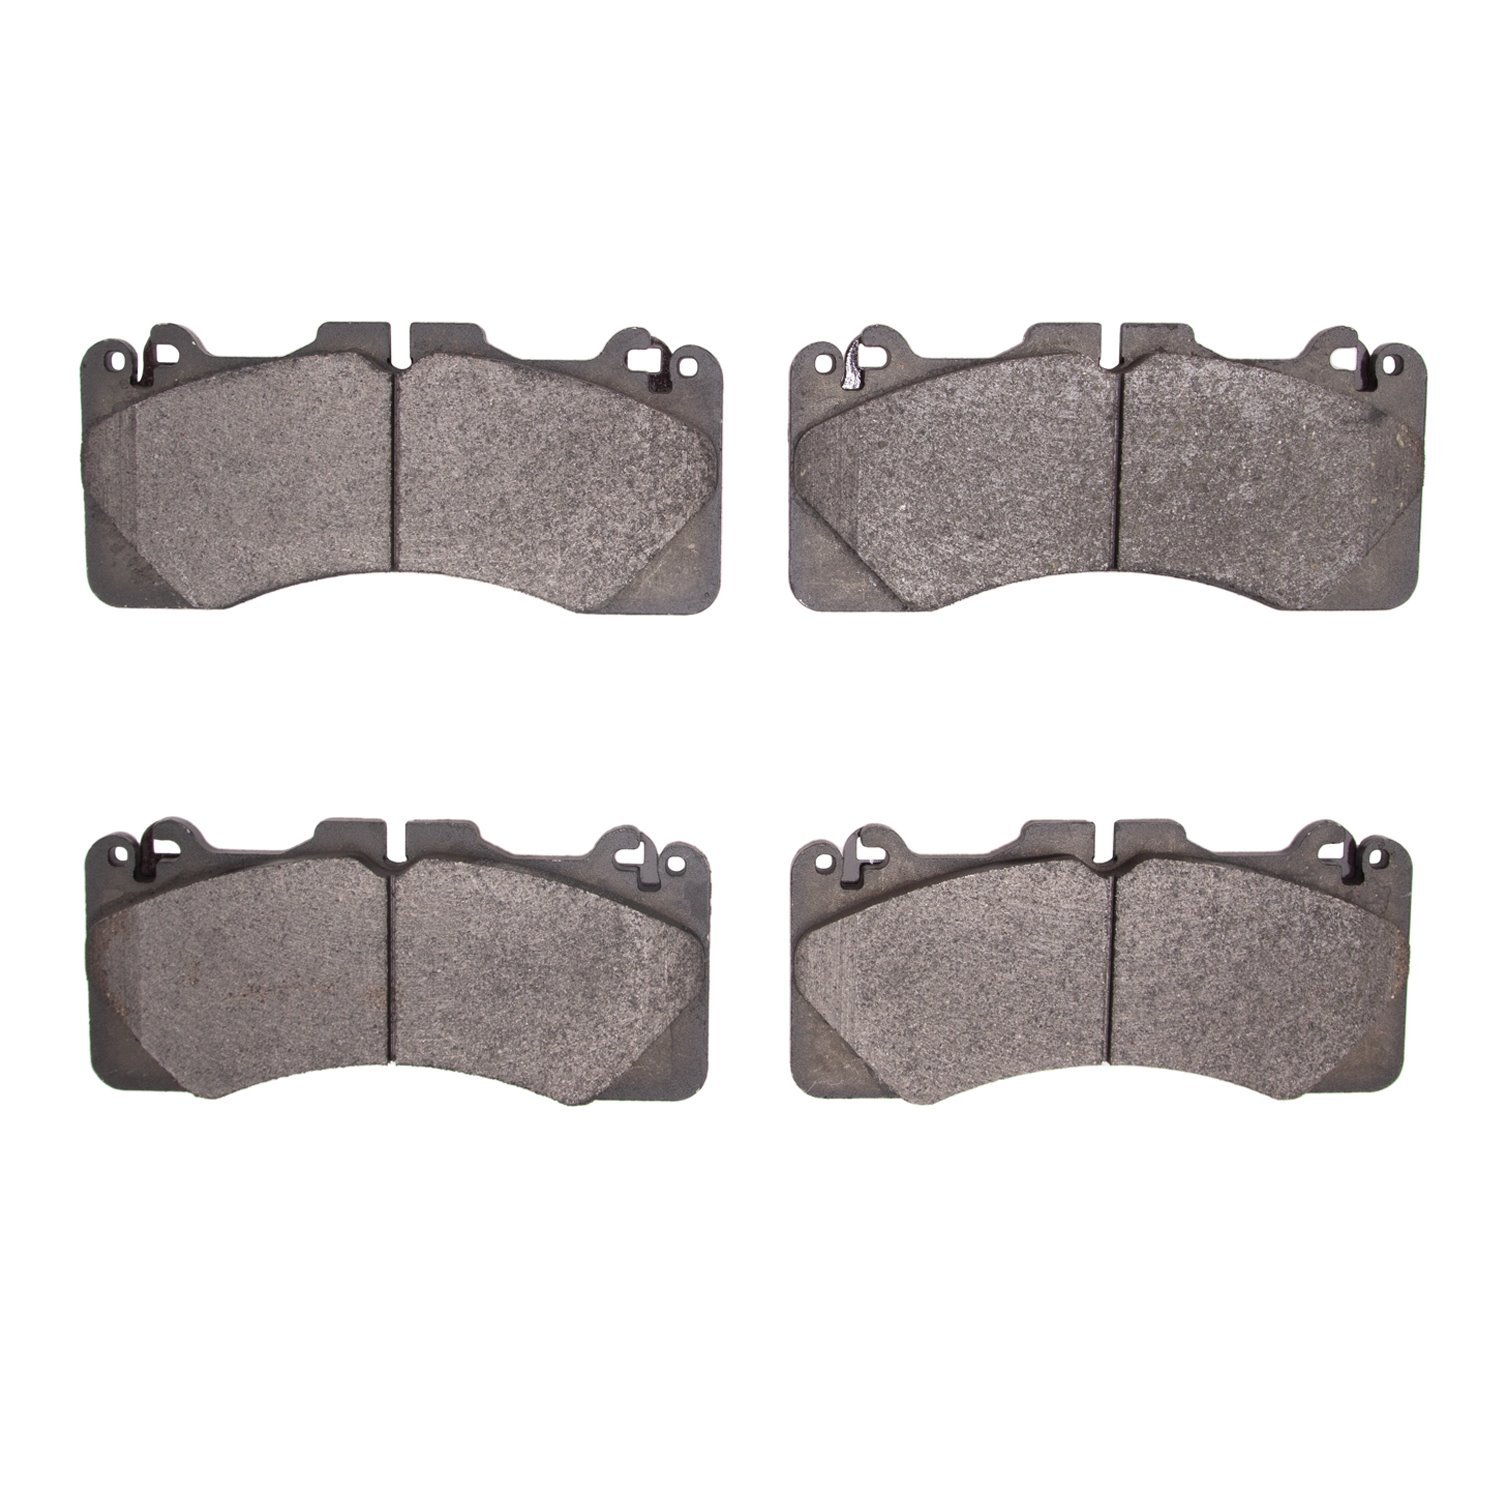 1600-1440-00 5000 Euro Ceramic Brake Pads, Fits Select Lexus/Toyota/Scion, Position: Front